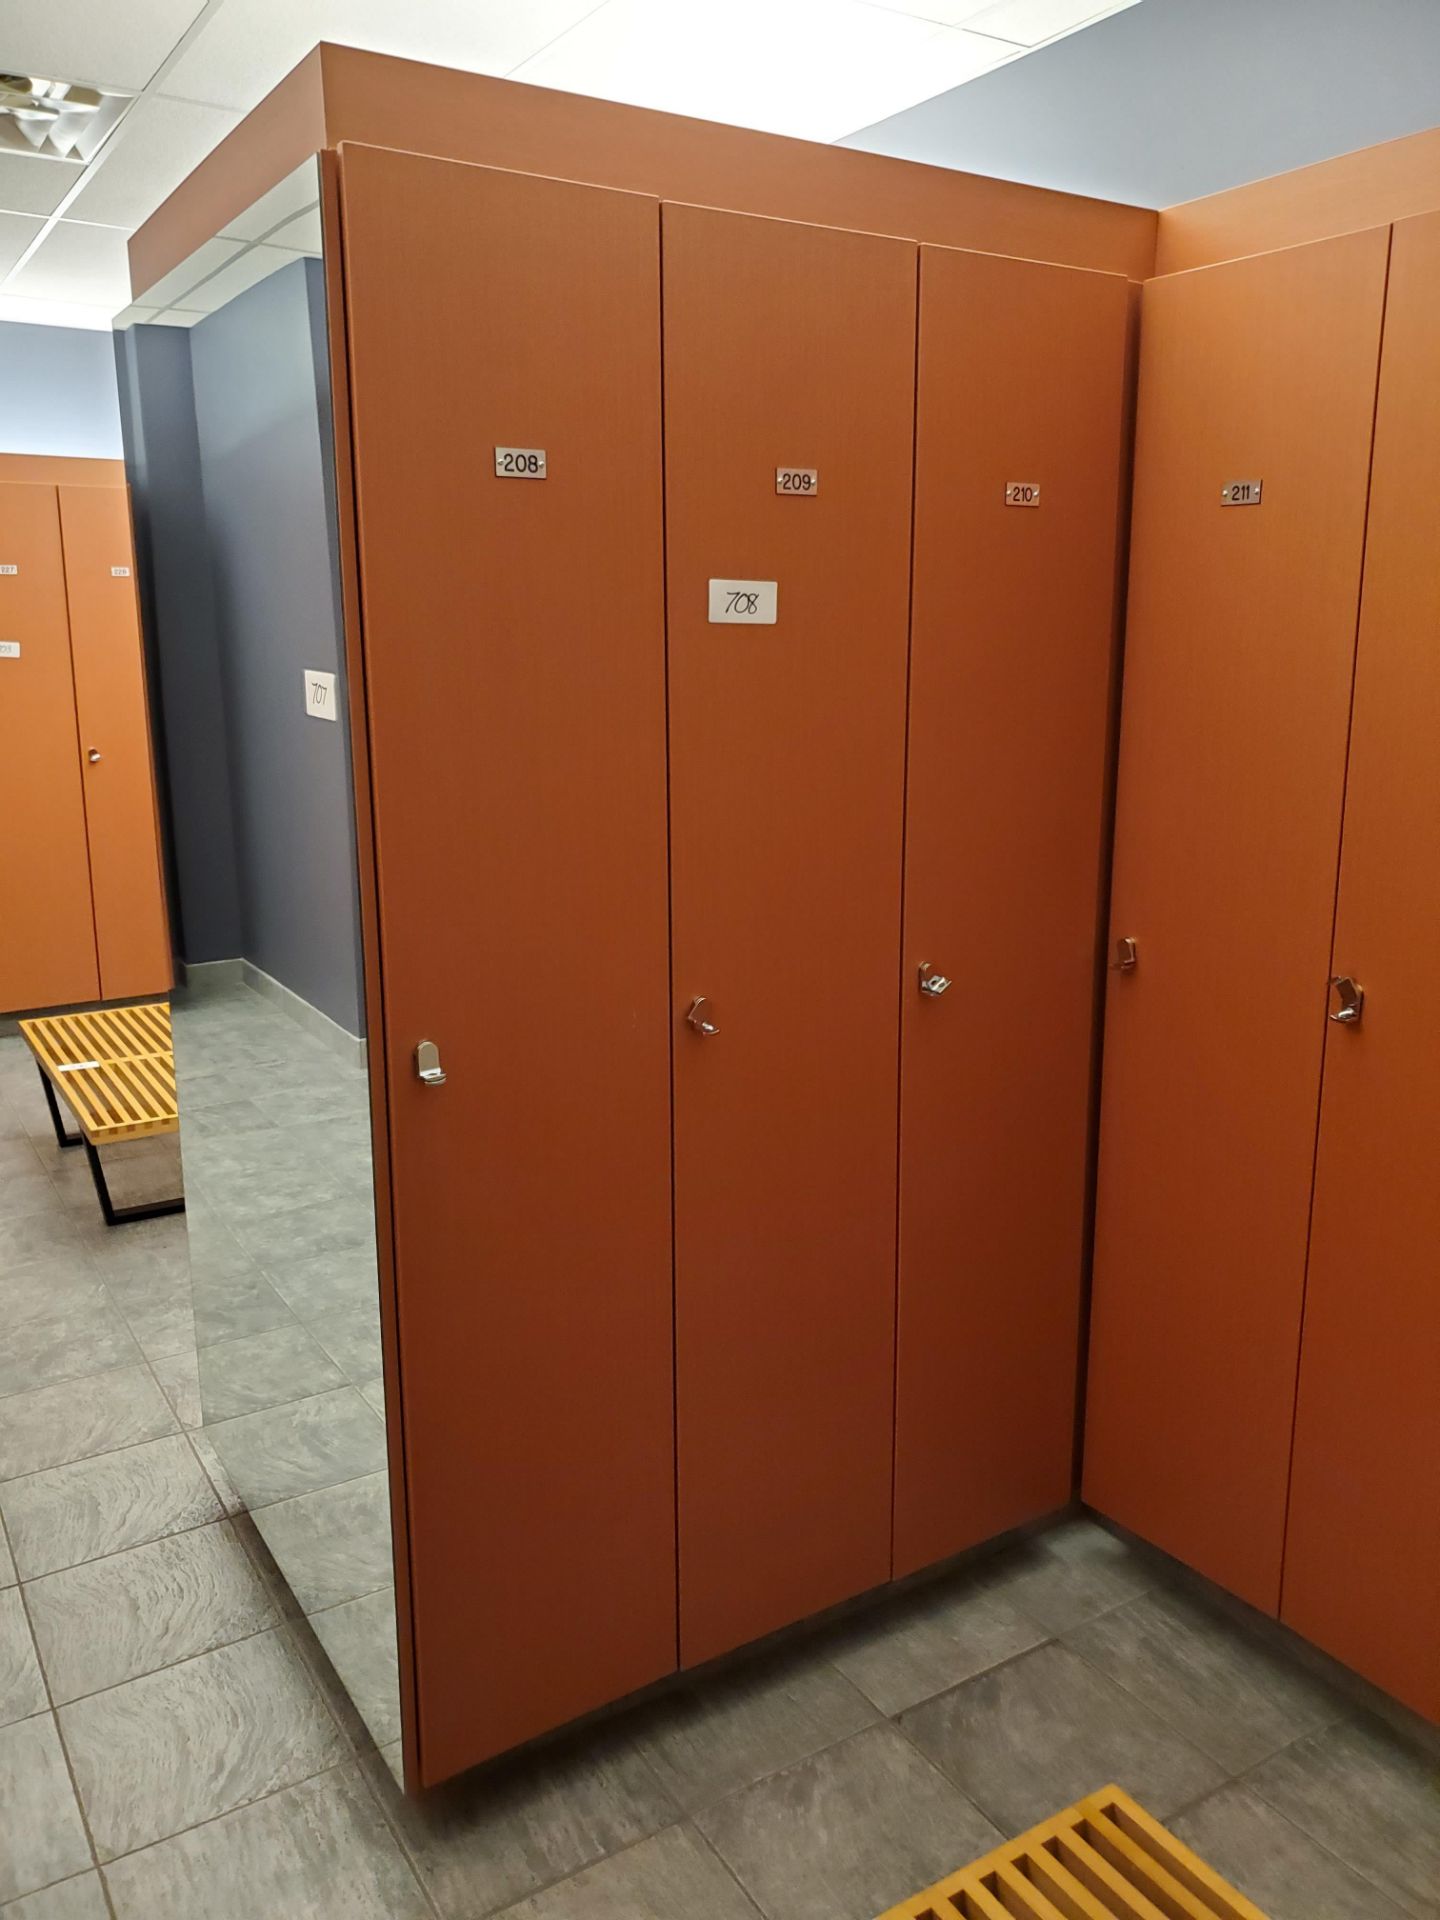 (3) 15"x76.5" Wood Lockers